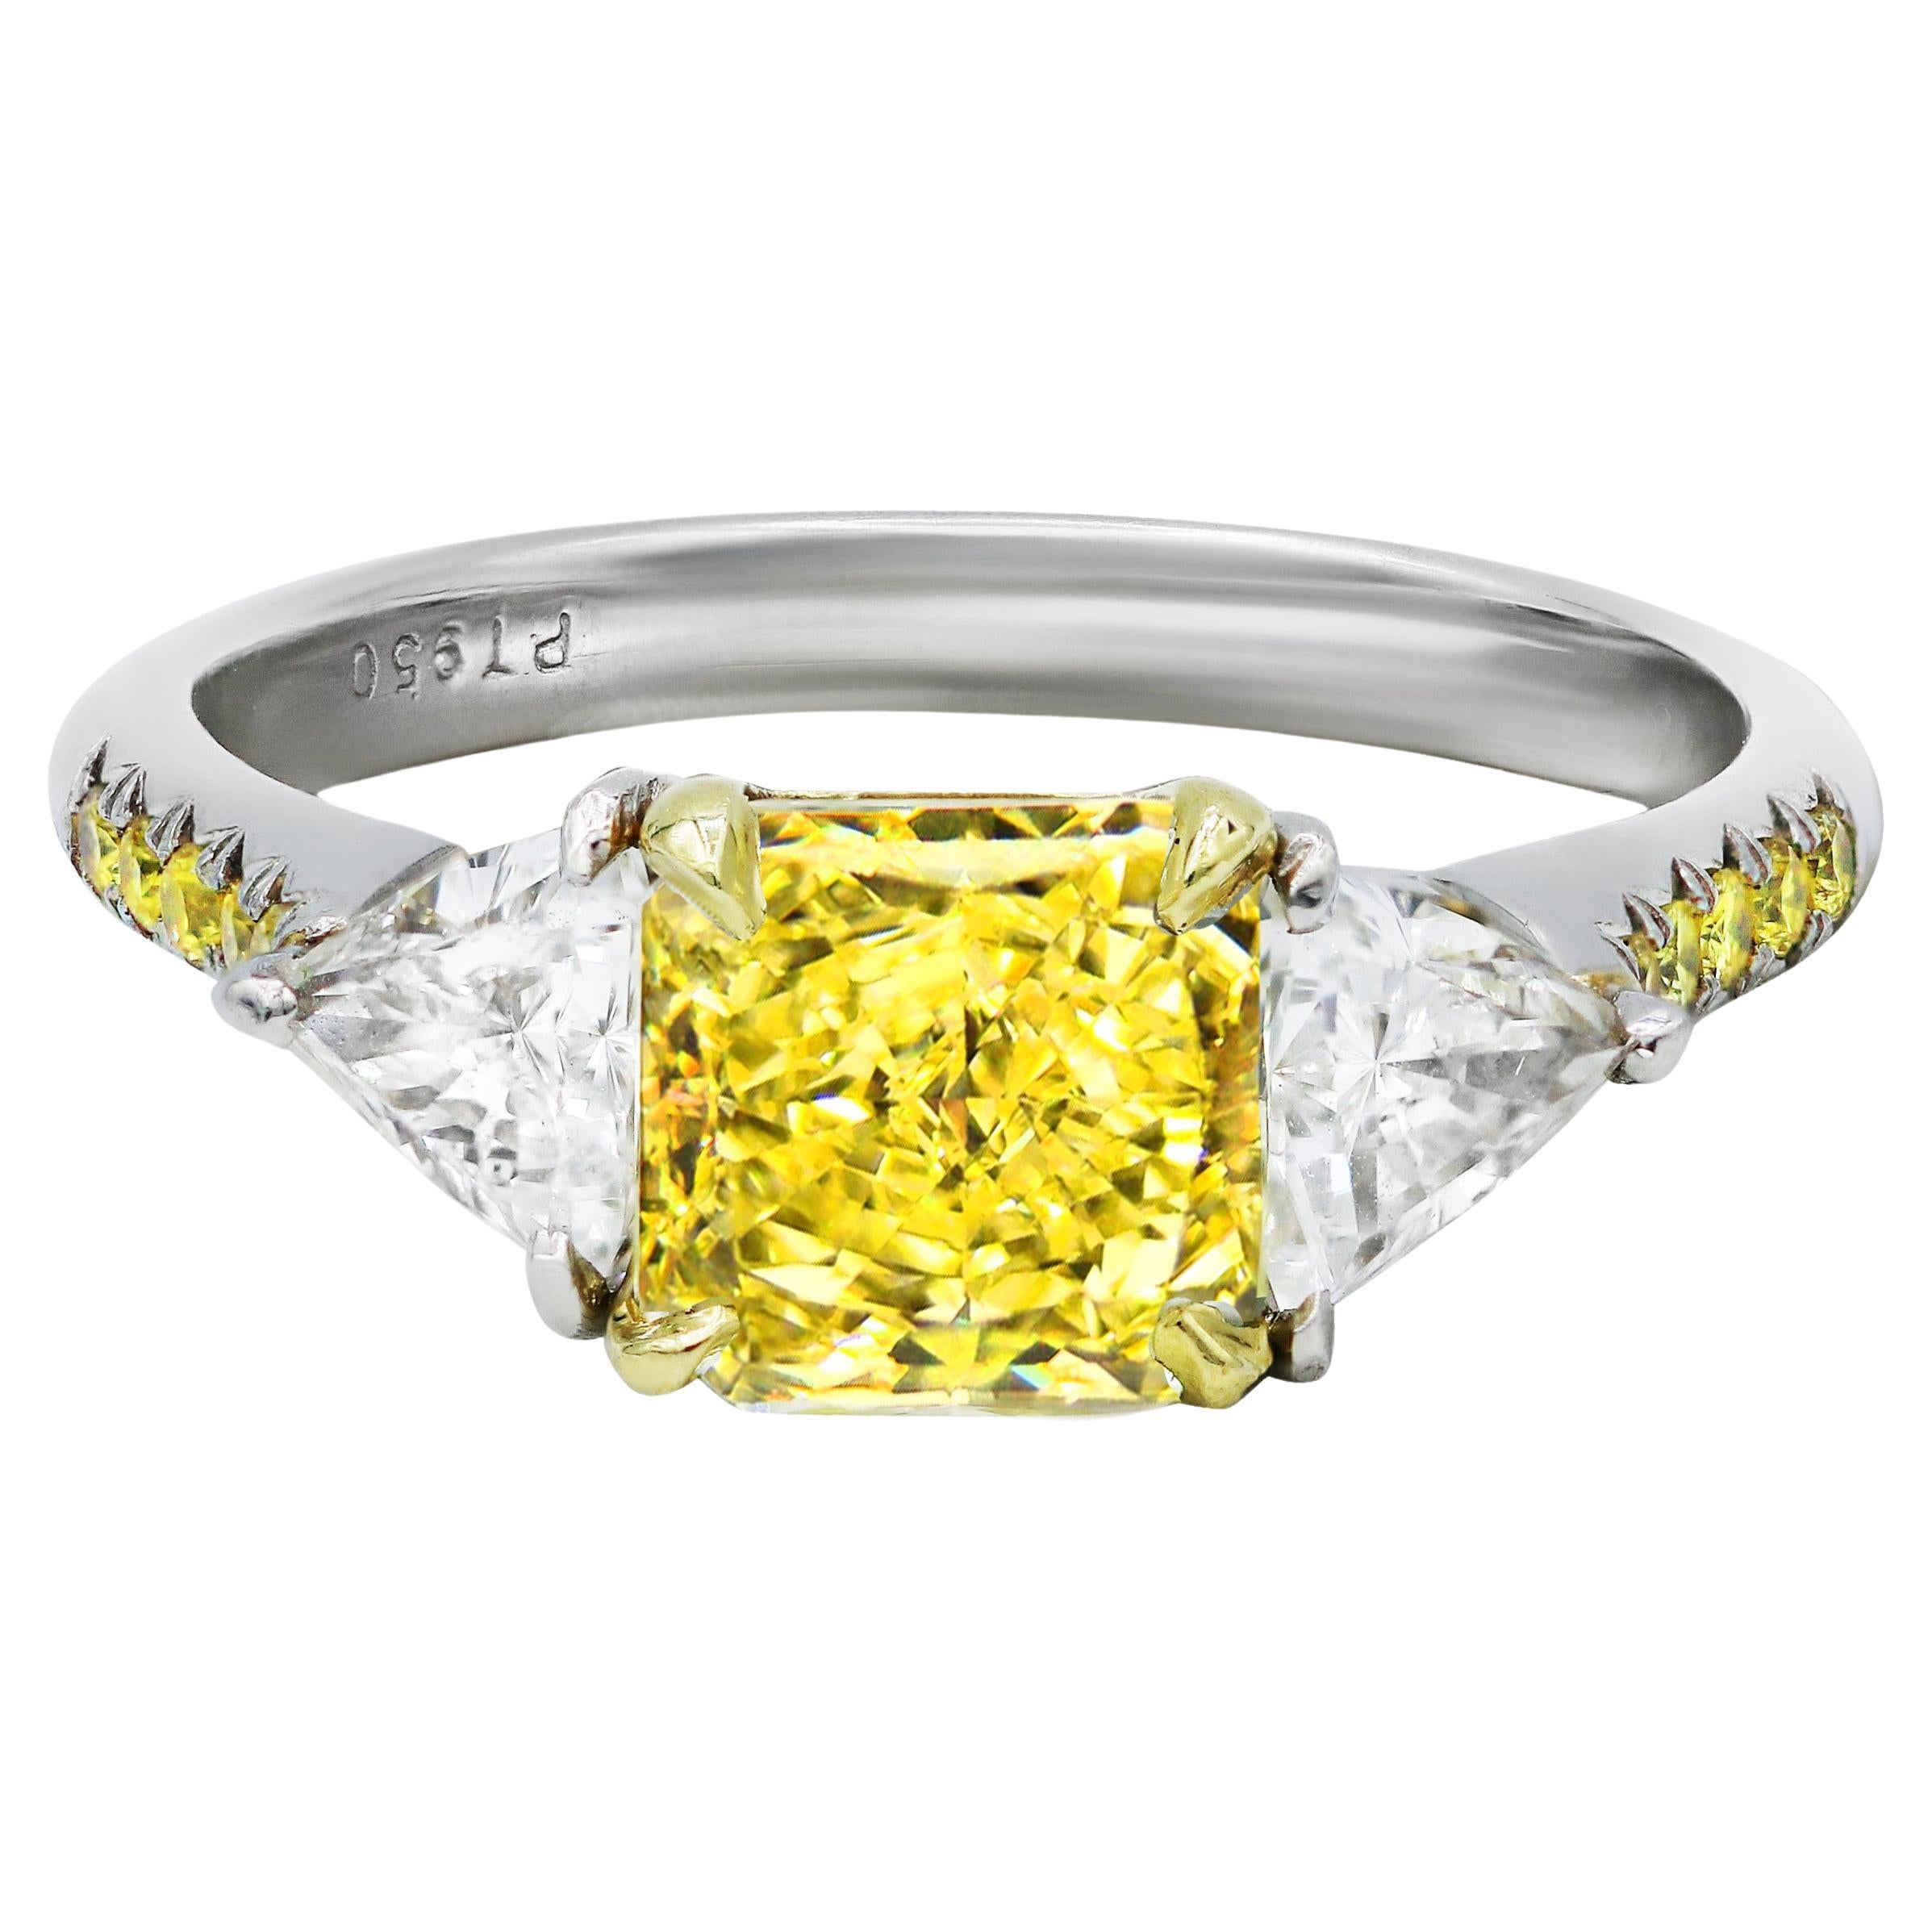 Diana M. Platinum  1.42 ct radiant cut yellow diamond (FY VS2) engagement ring